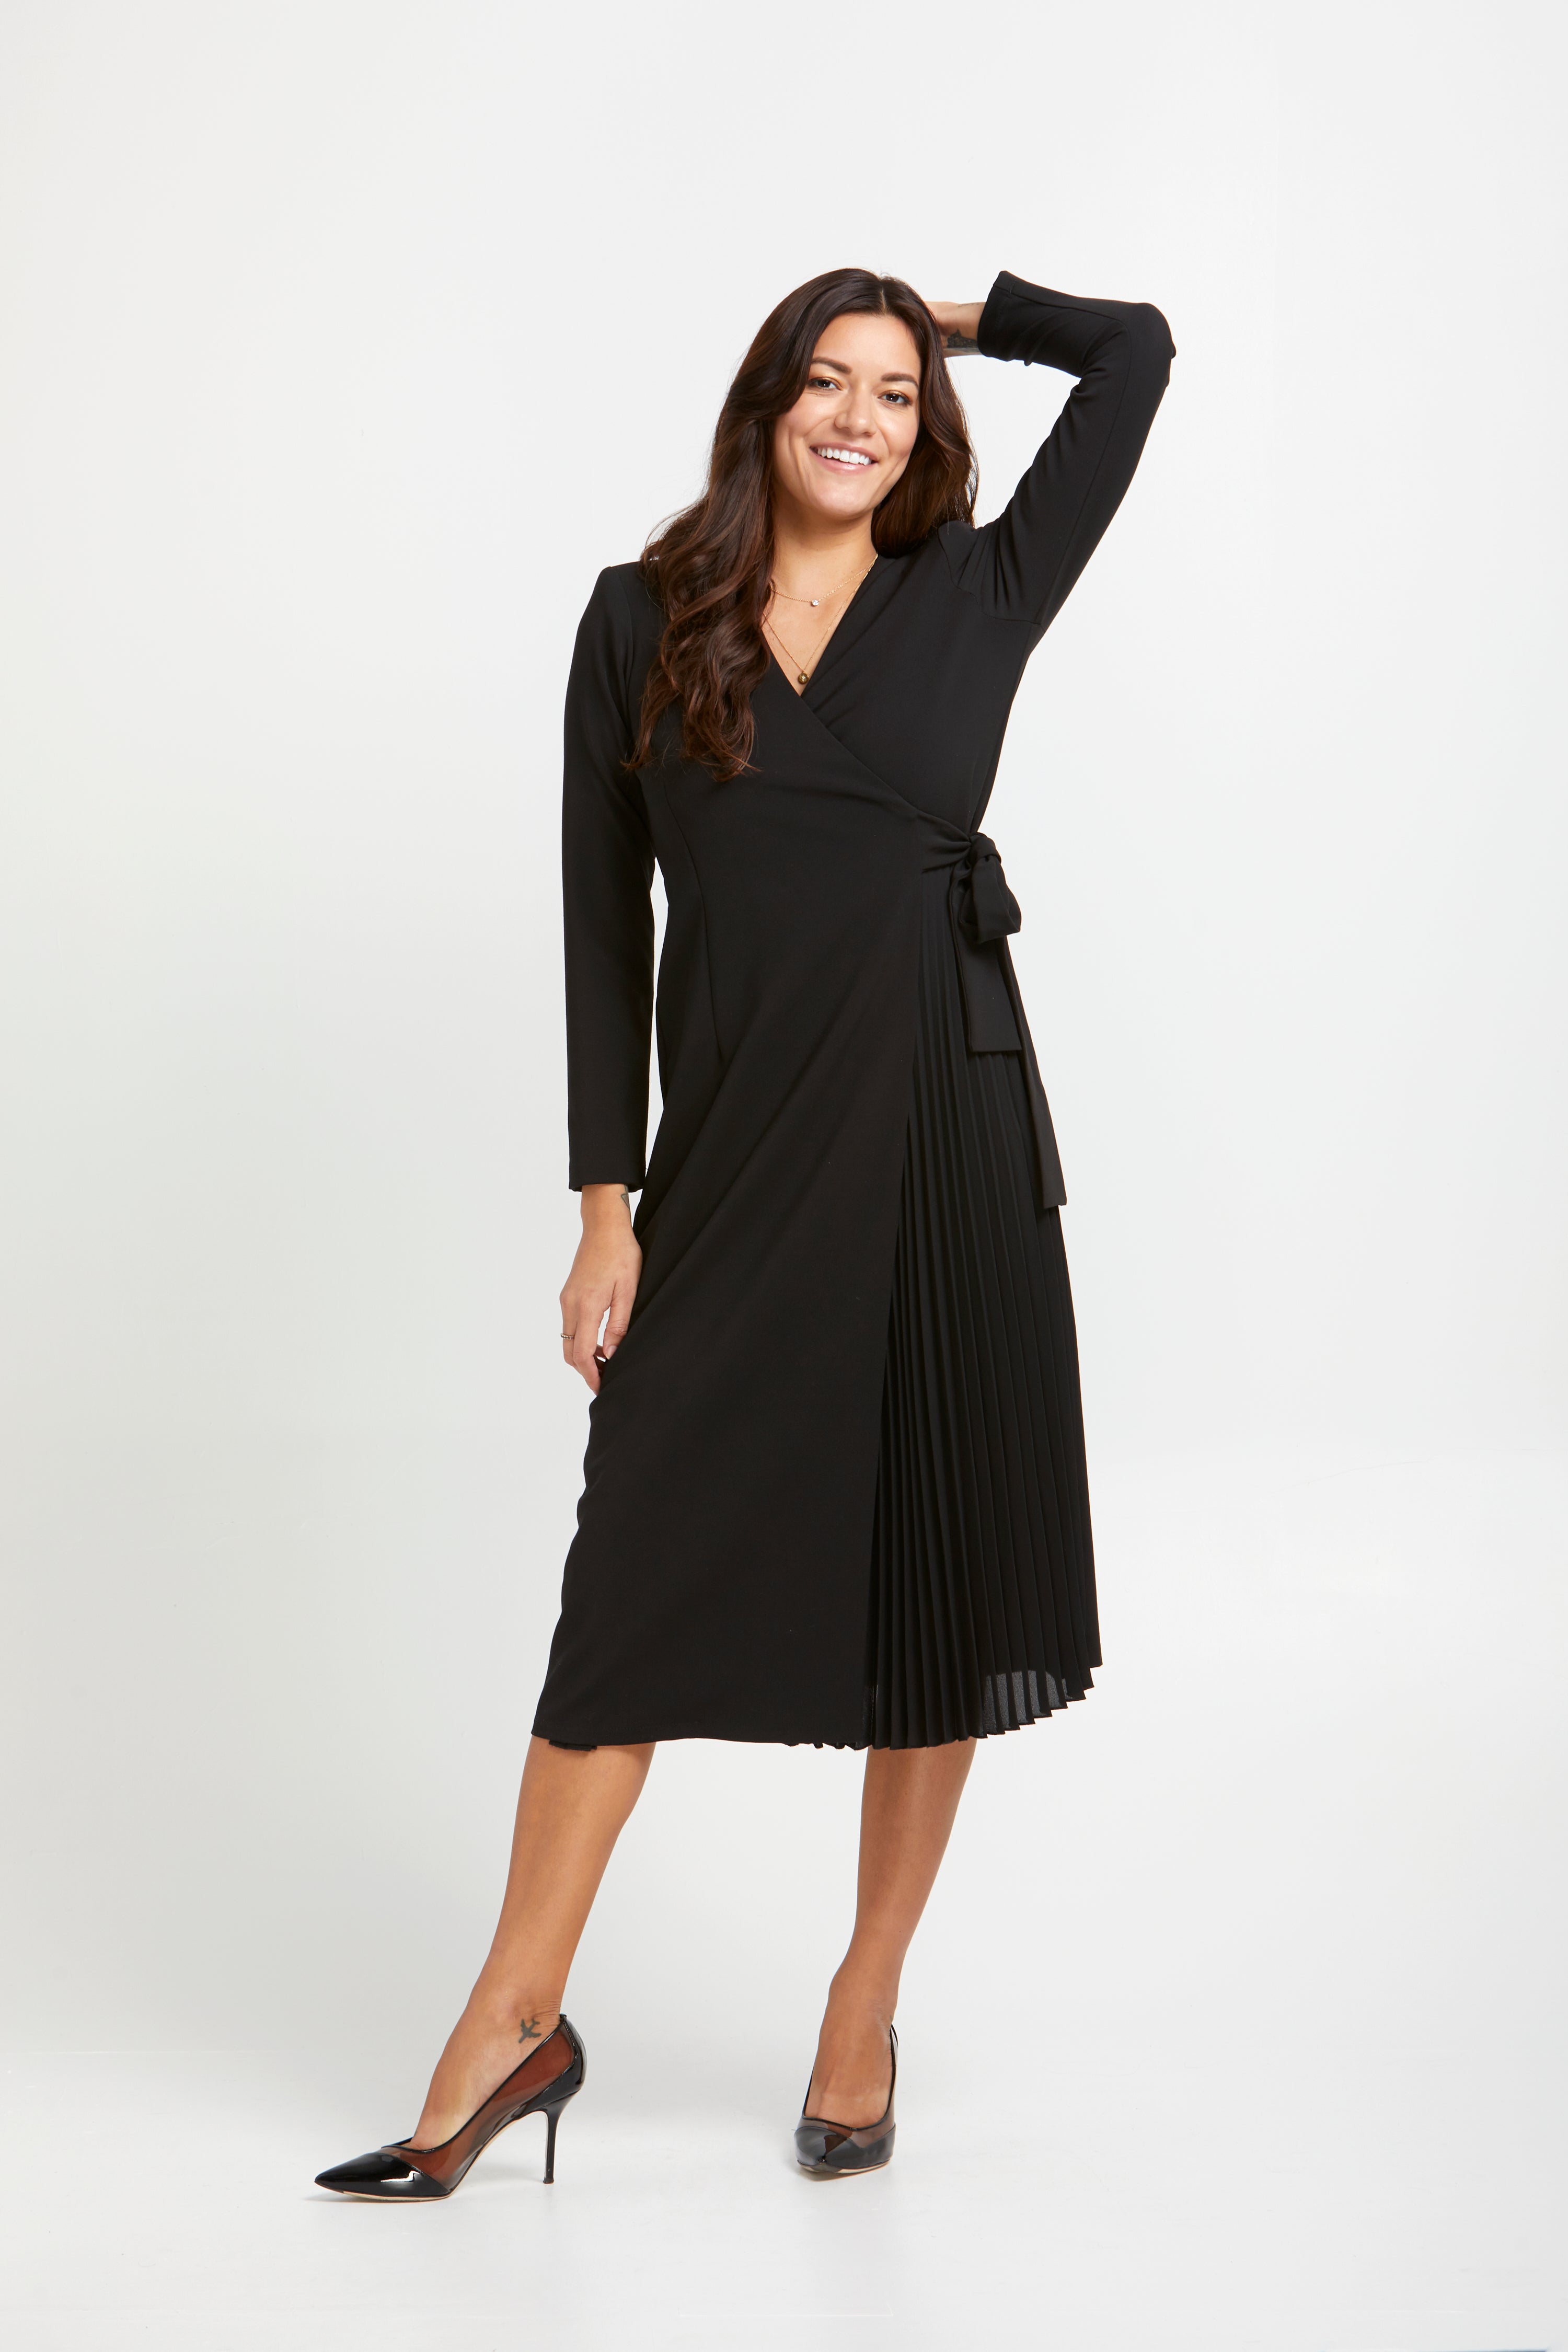 Cristina Gavioli Sofia Black Pleated Long Sleeve Wrap Dress- Italian Women Clothing